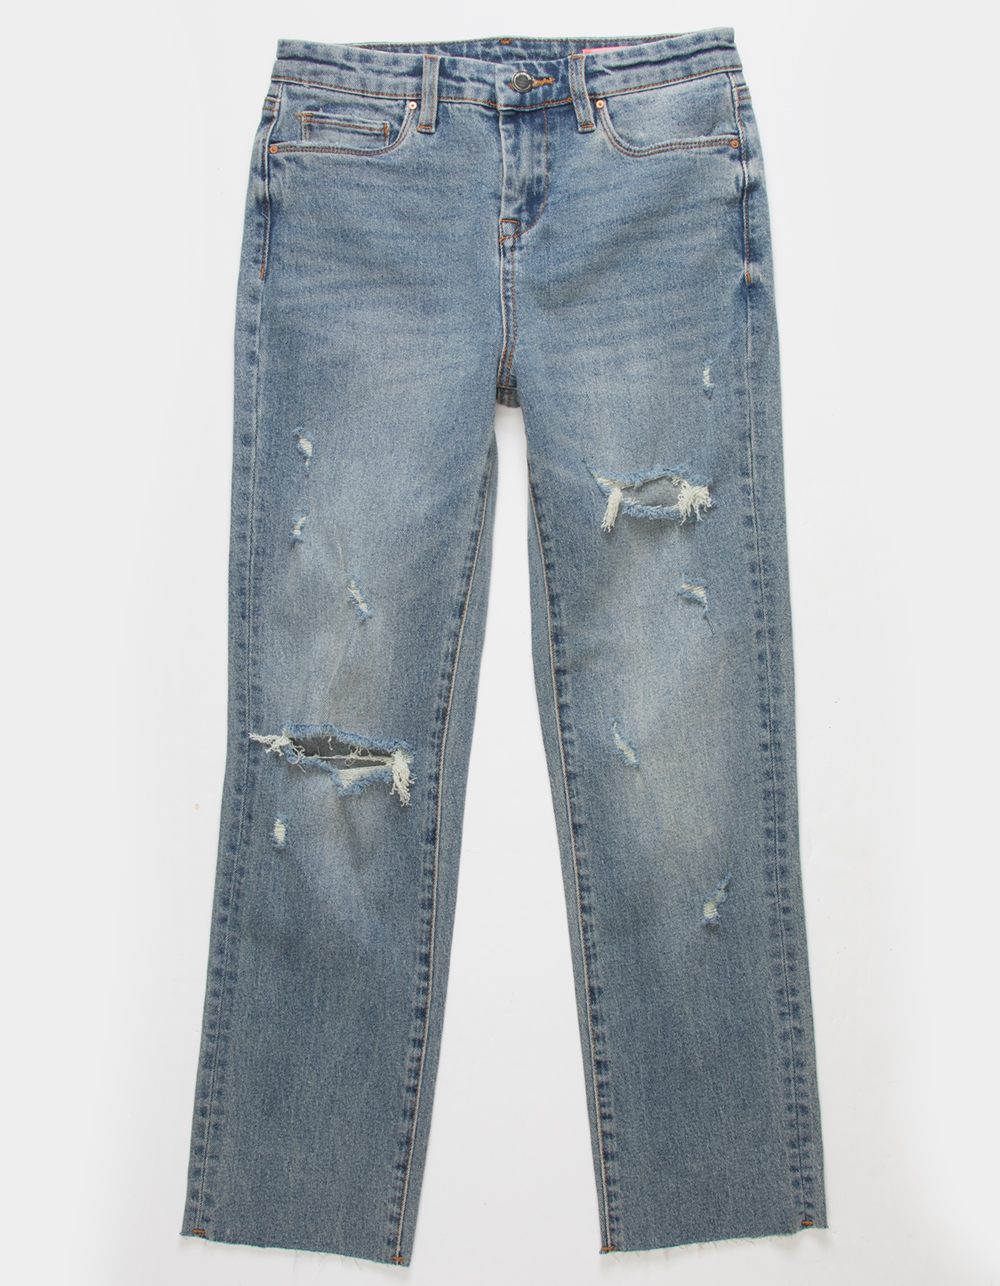 BLANK NYC Destruct Girls Jeans - MEDIUM WASH | Tillys